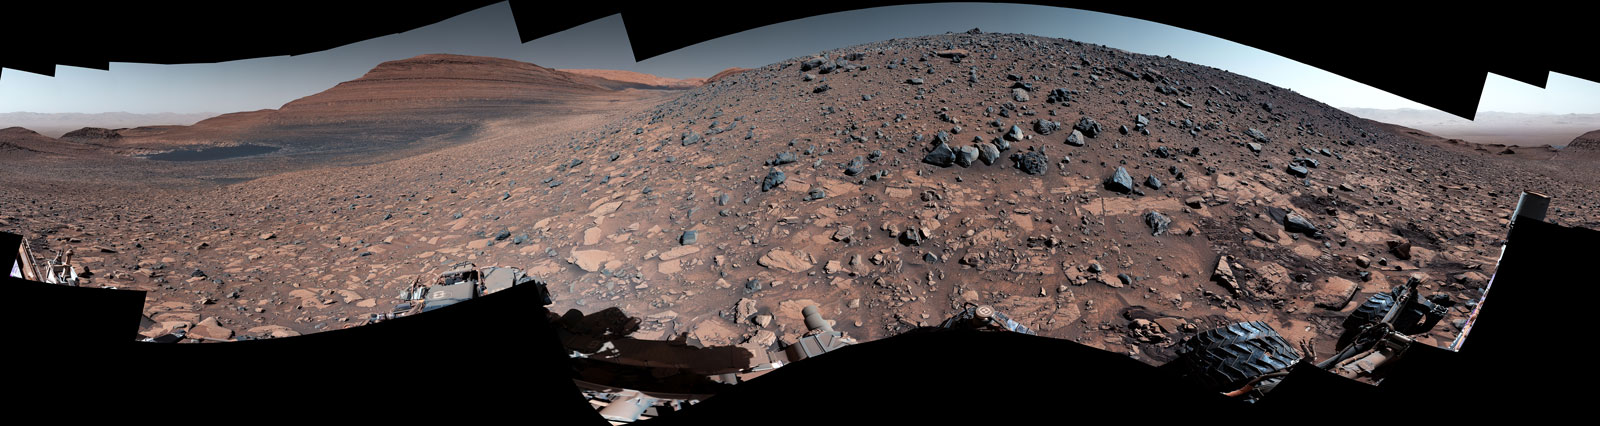 slide 4 - Curiosity Reaches Mars Ridge Where Water Left Debris Pileup